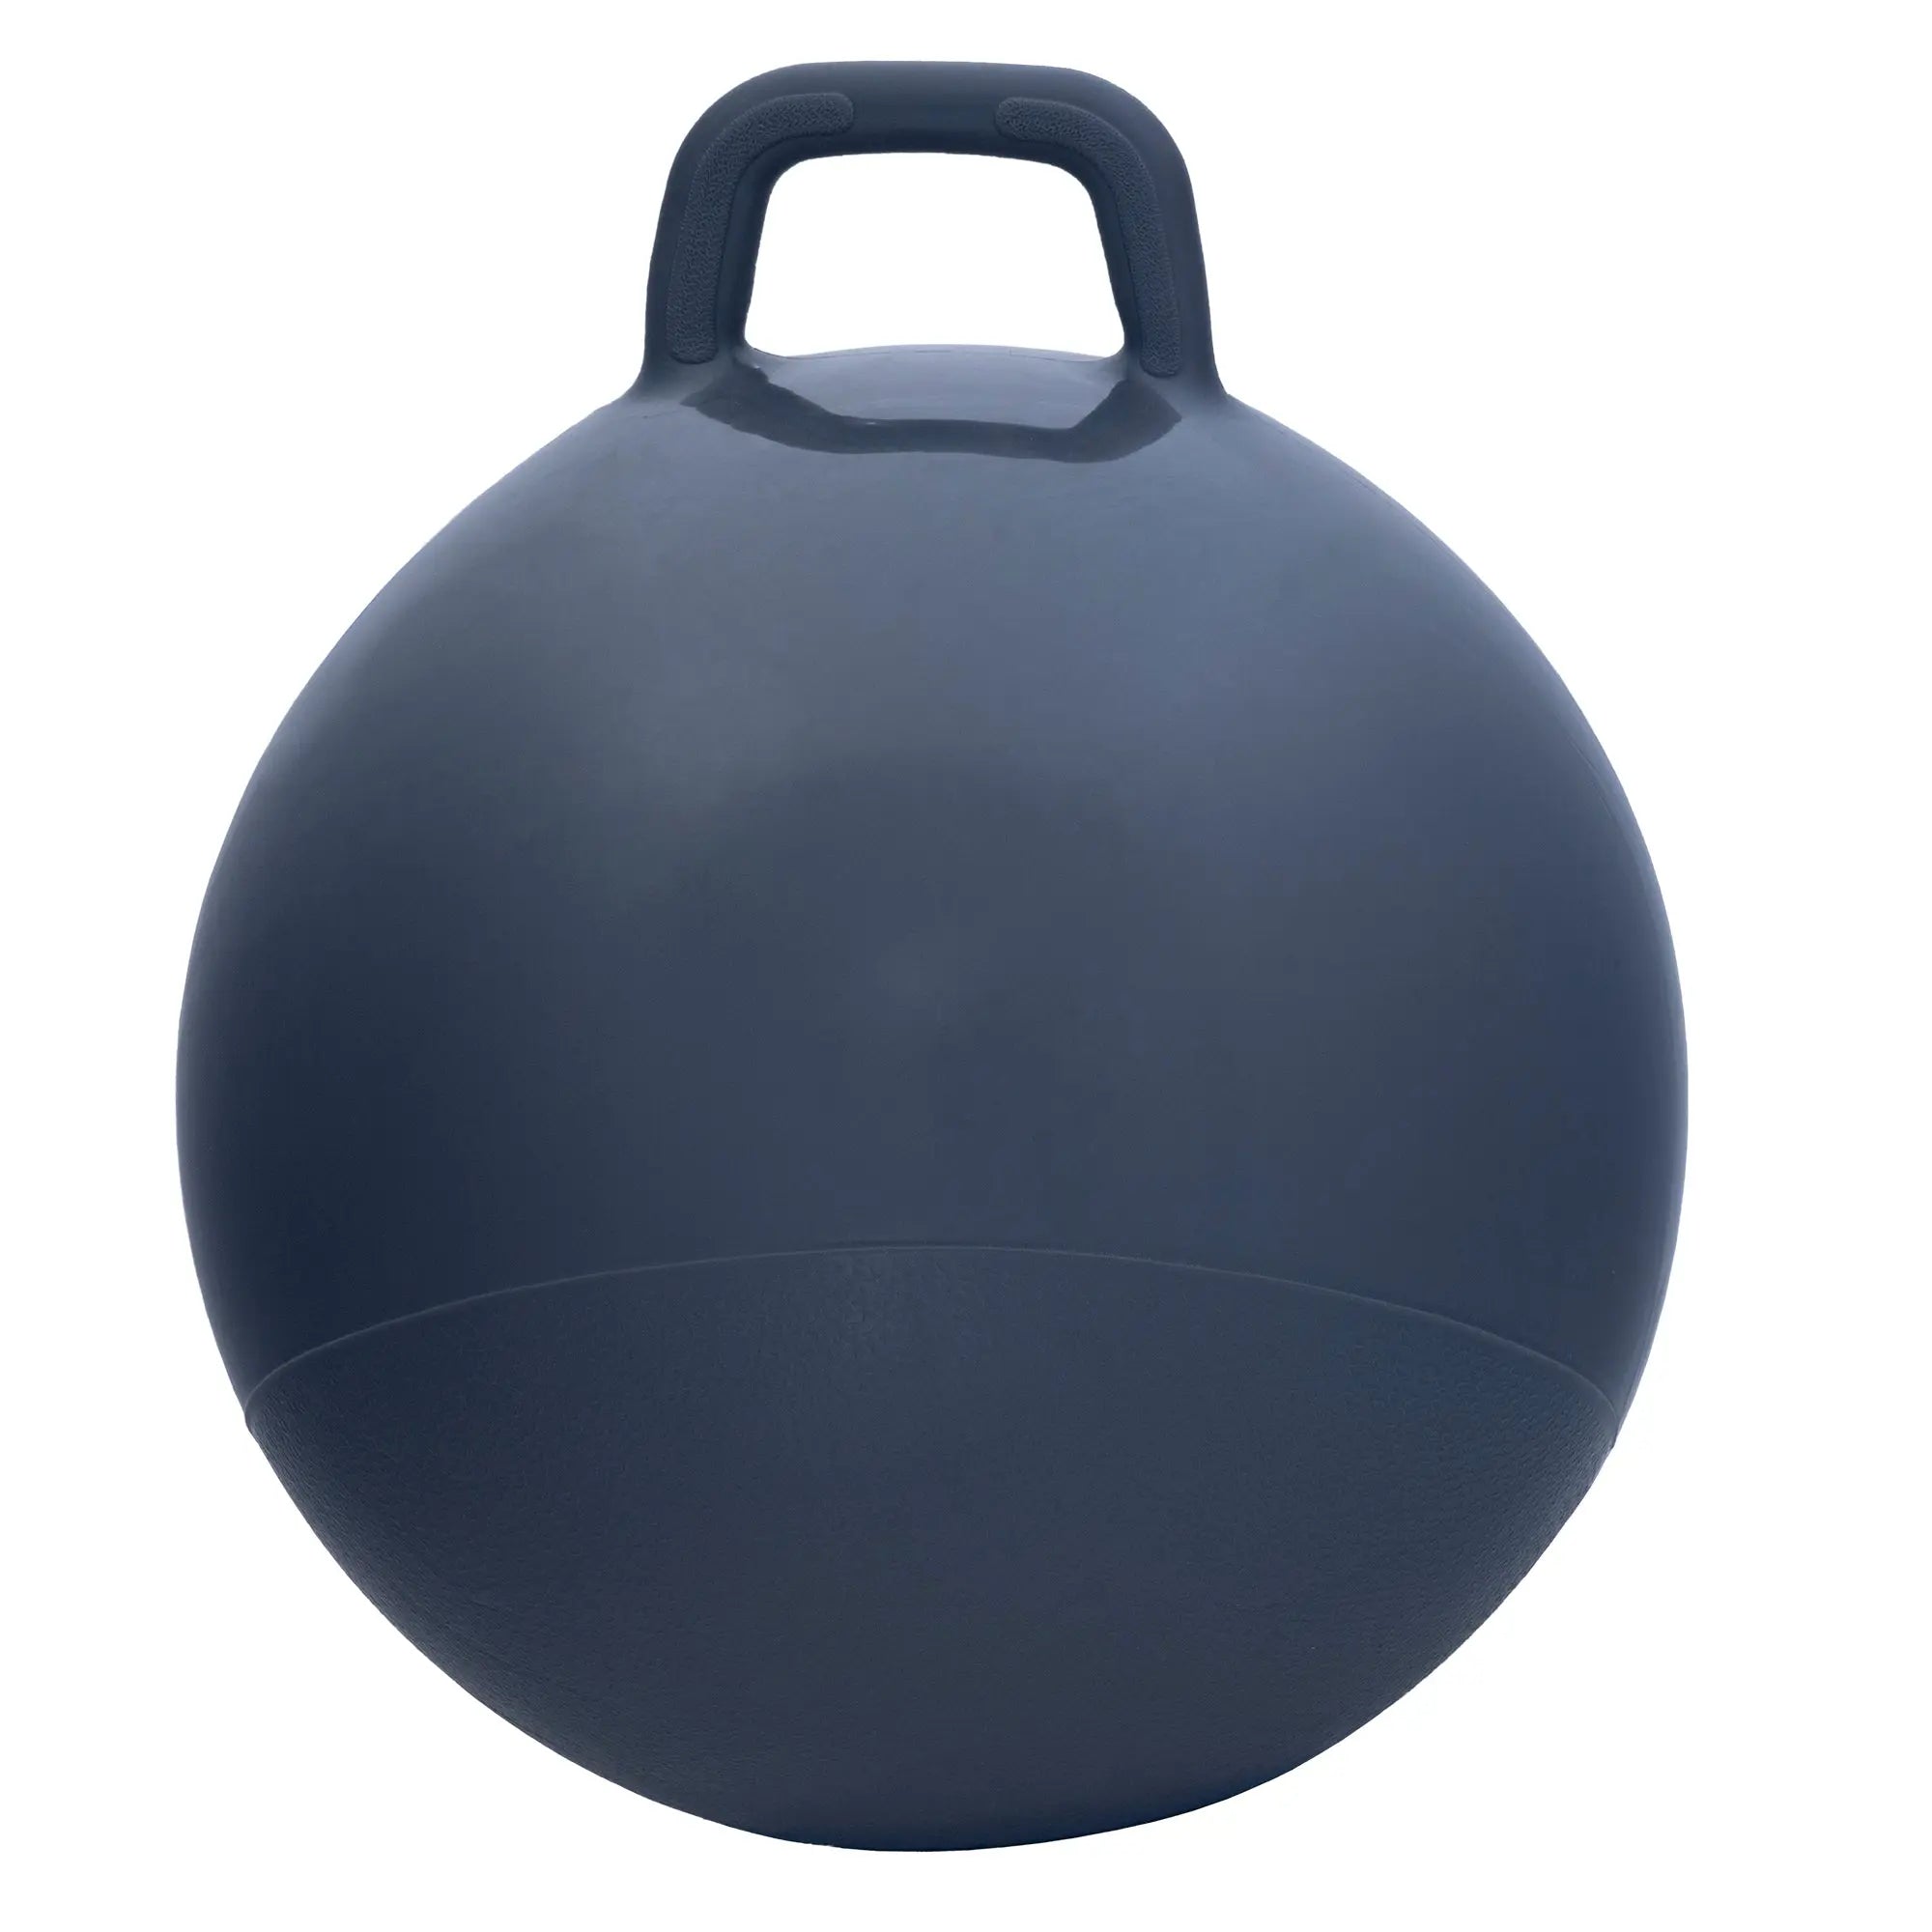 SWELL Wakesurf - Original Buoy Ball Inflatable Bumper - Great For Tie-ups SWELL Wakesurf